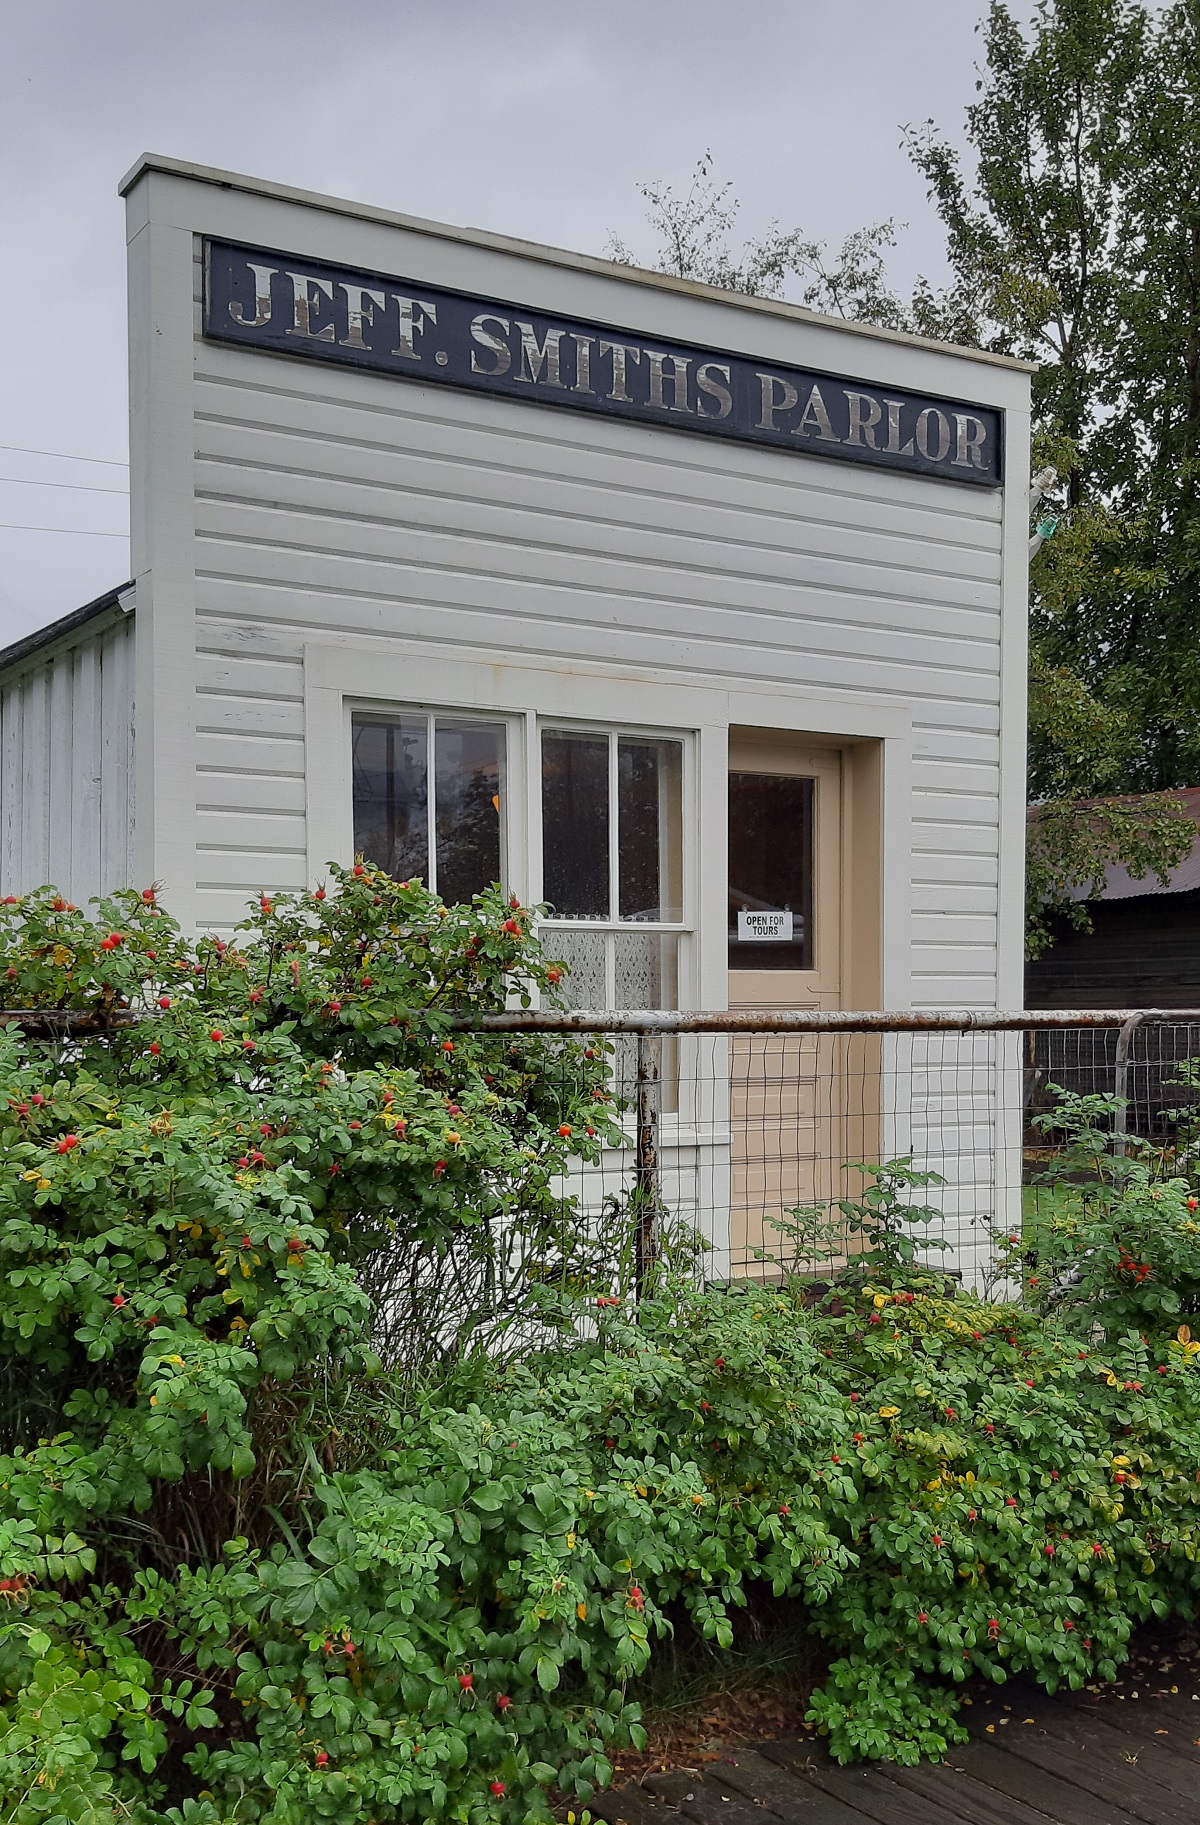 Jeff. smith's Parlor, Skagway